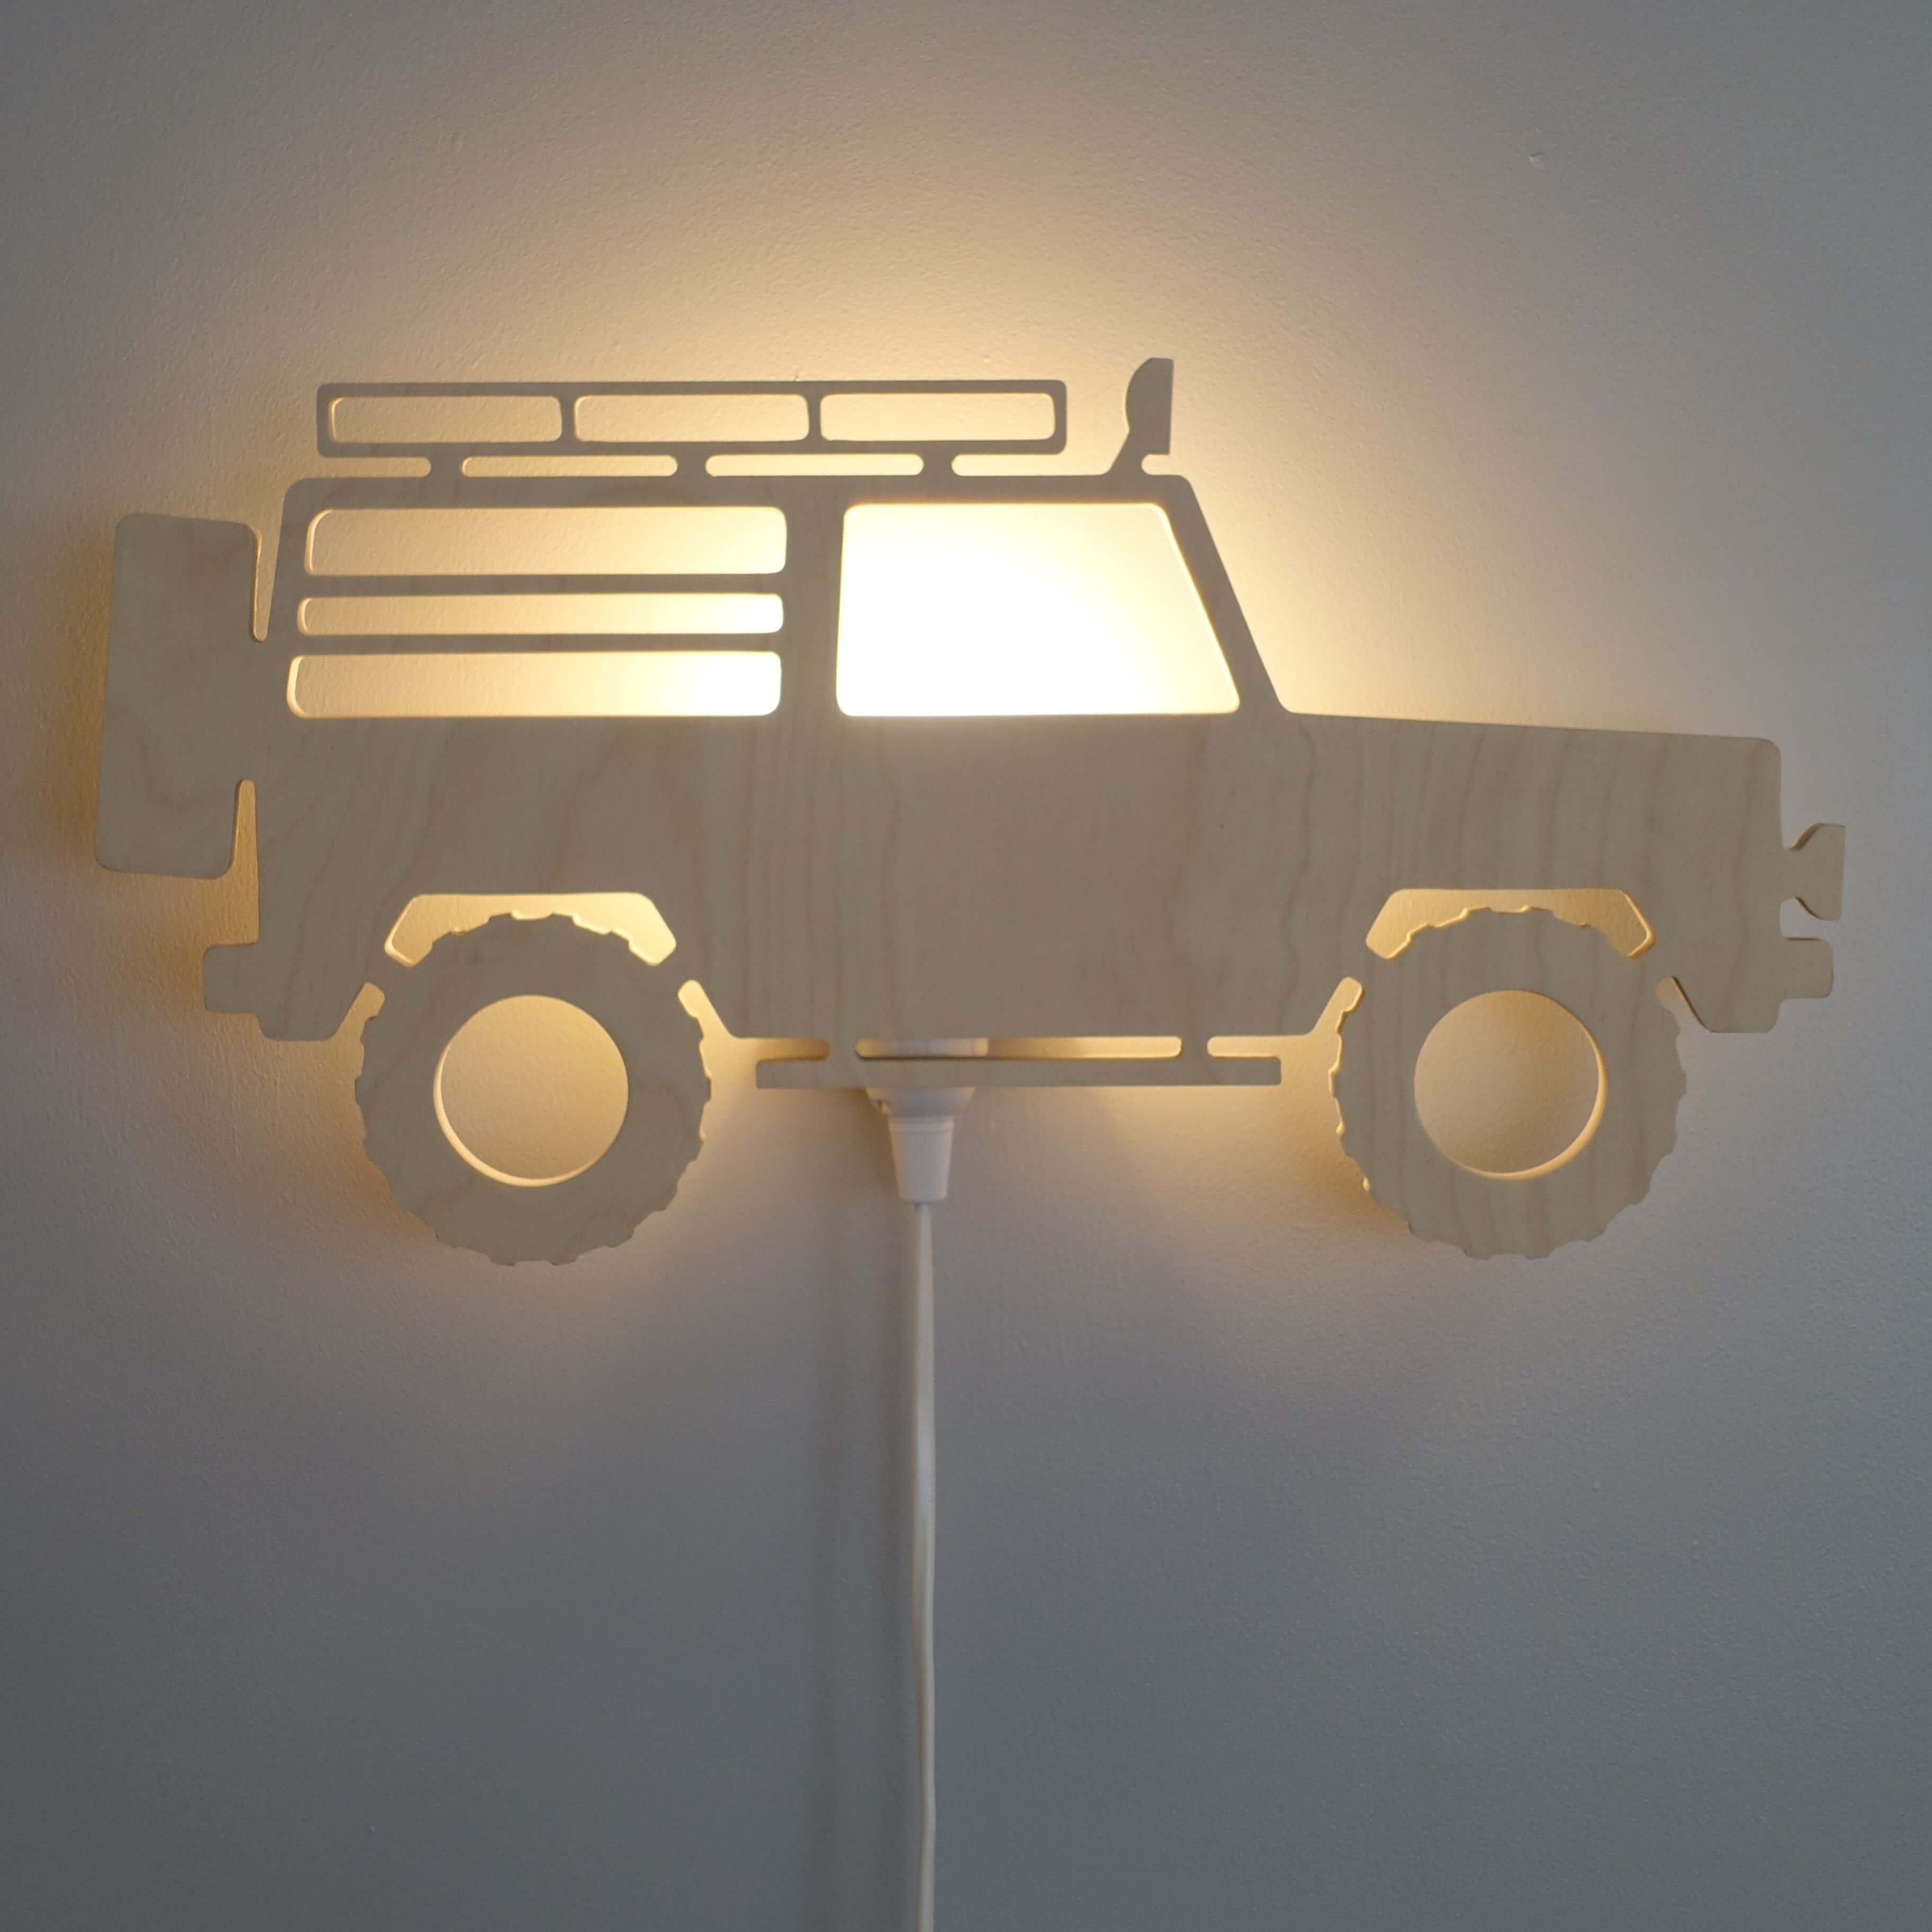 Houten wandlamp kinderkamer | 4x4 Jeep - toddie.nl